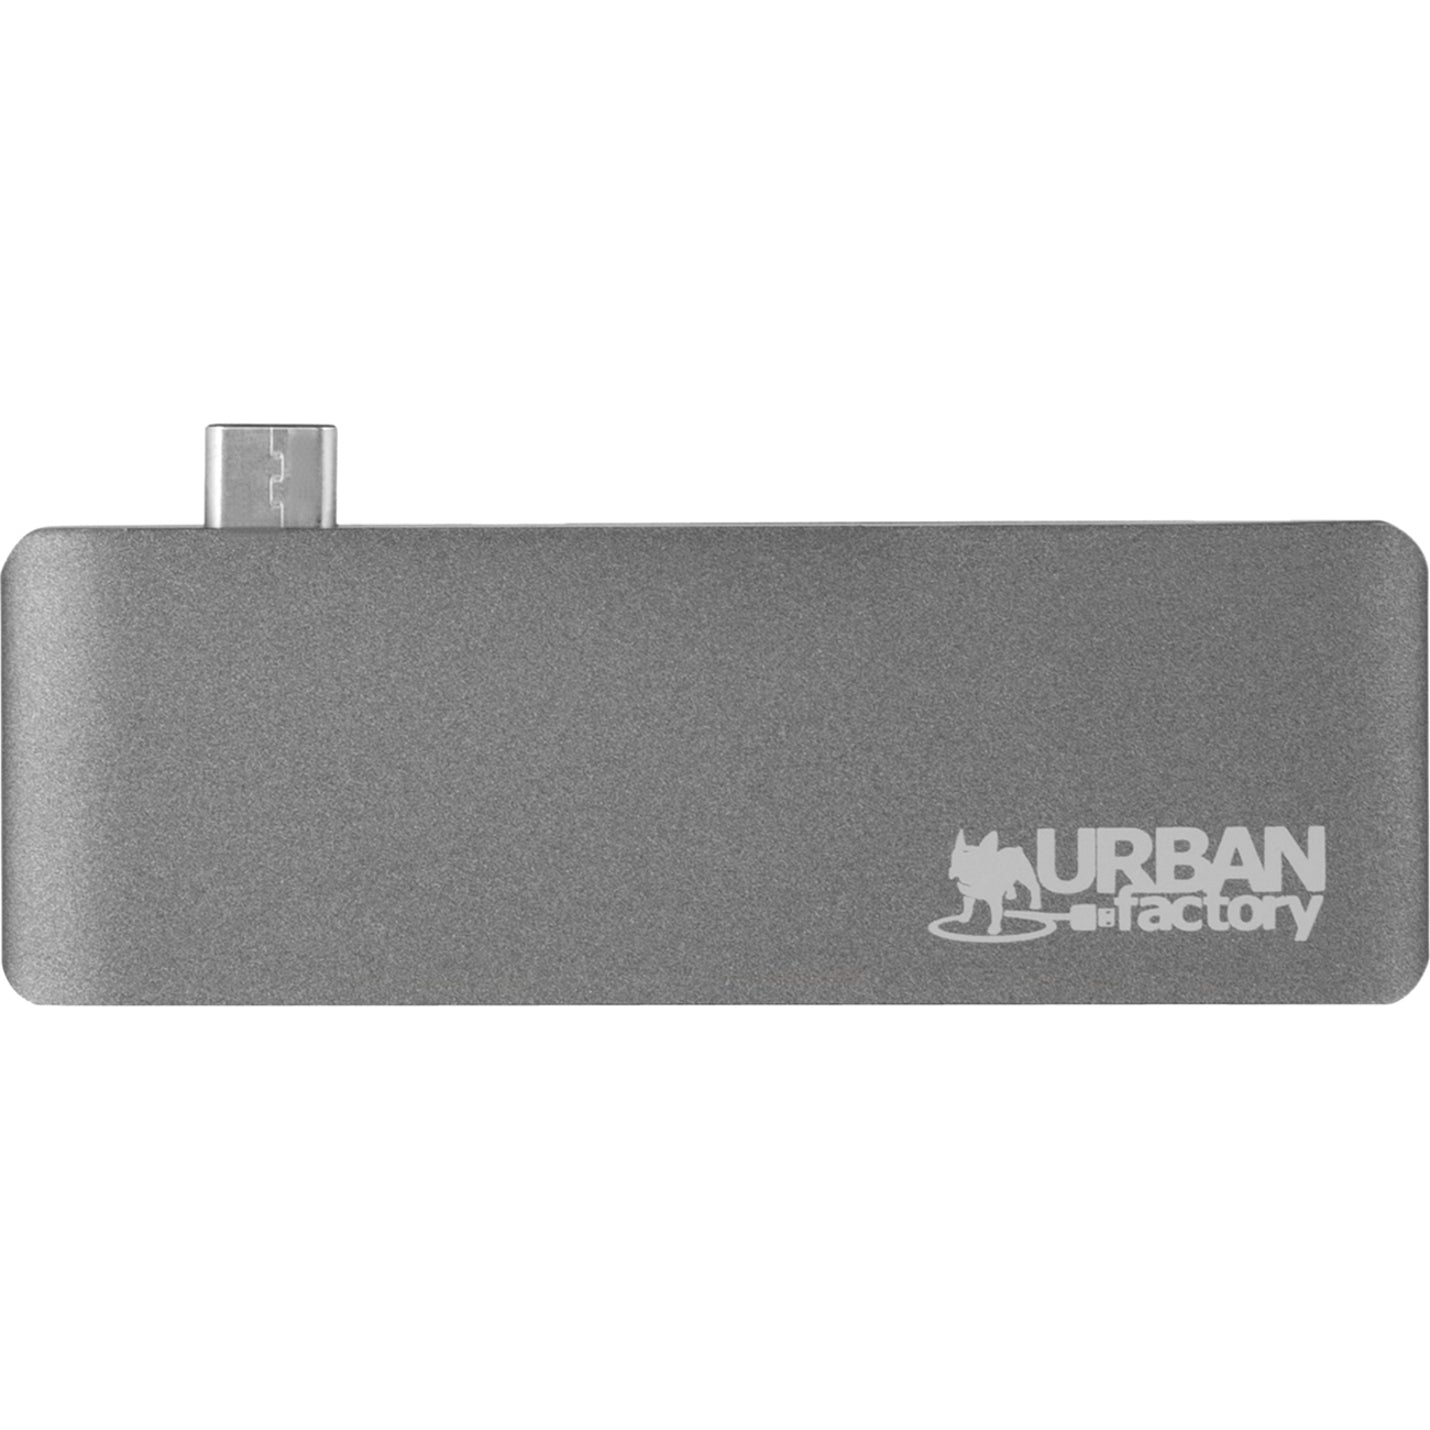 Urban Factory TCH02UF TYPE-C HUB 3xUSB 2.0, Compact USB Hub for PC and Mac Users